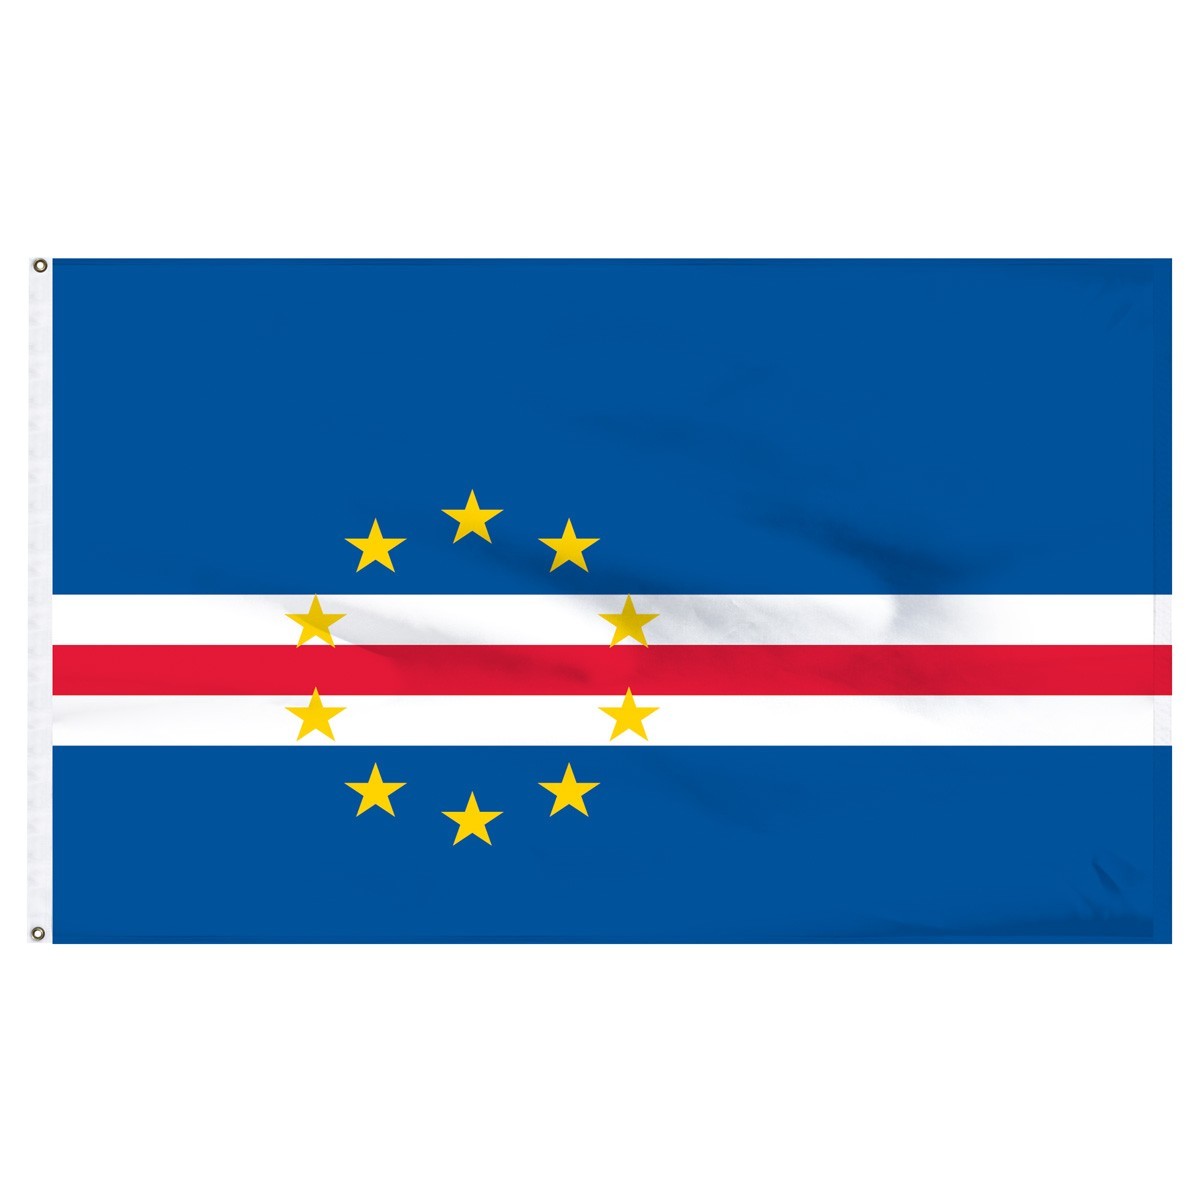 Cape Verde 5' x 8' Outdoor Nylon Flag